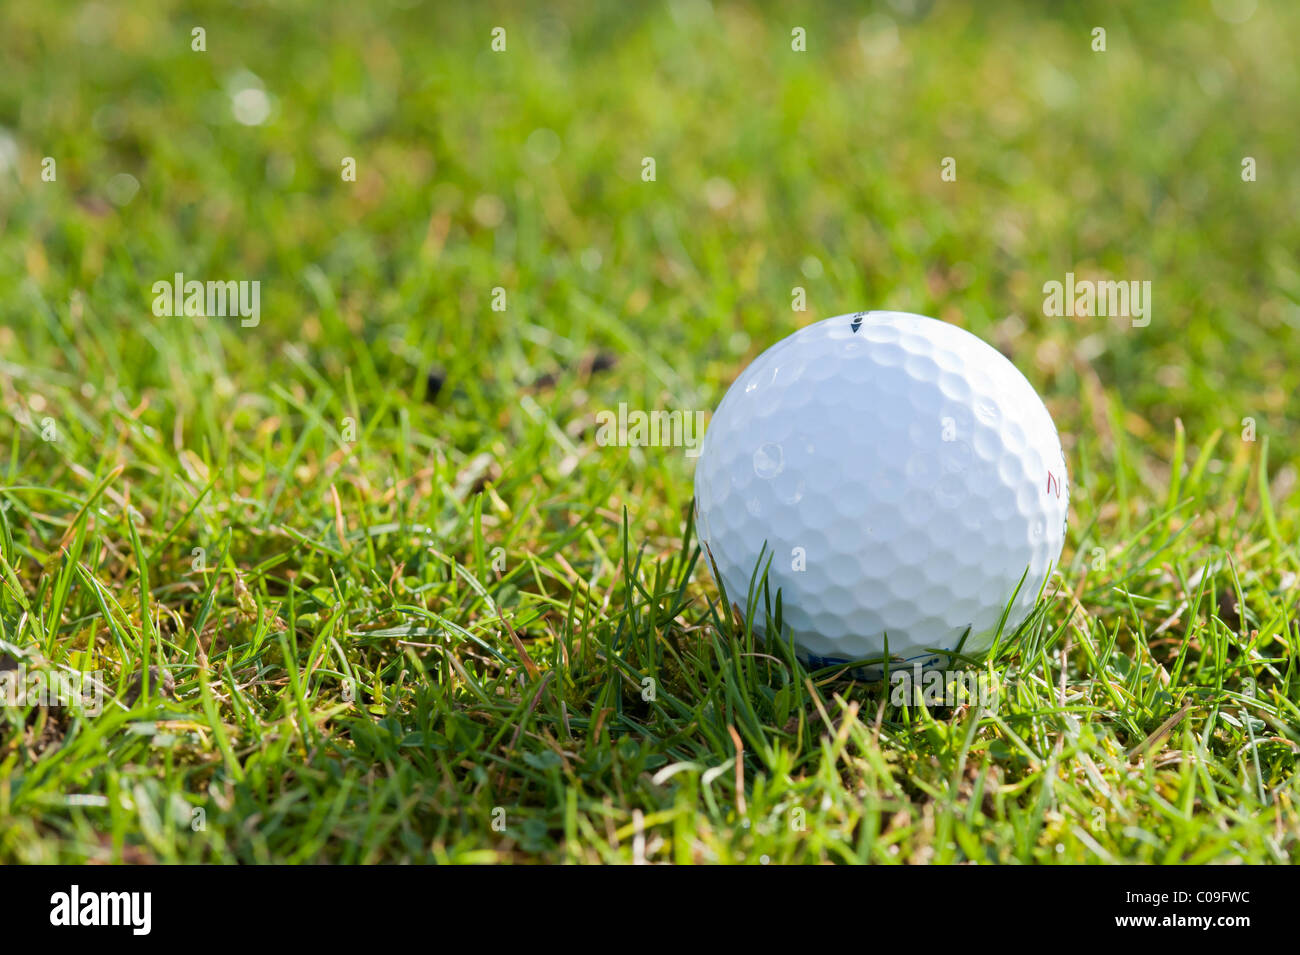 A golf ball on the fairway in sunshine. Stock Photo